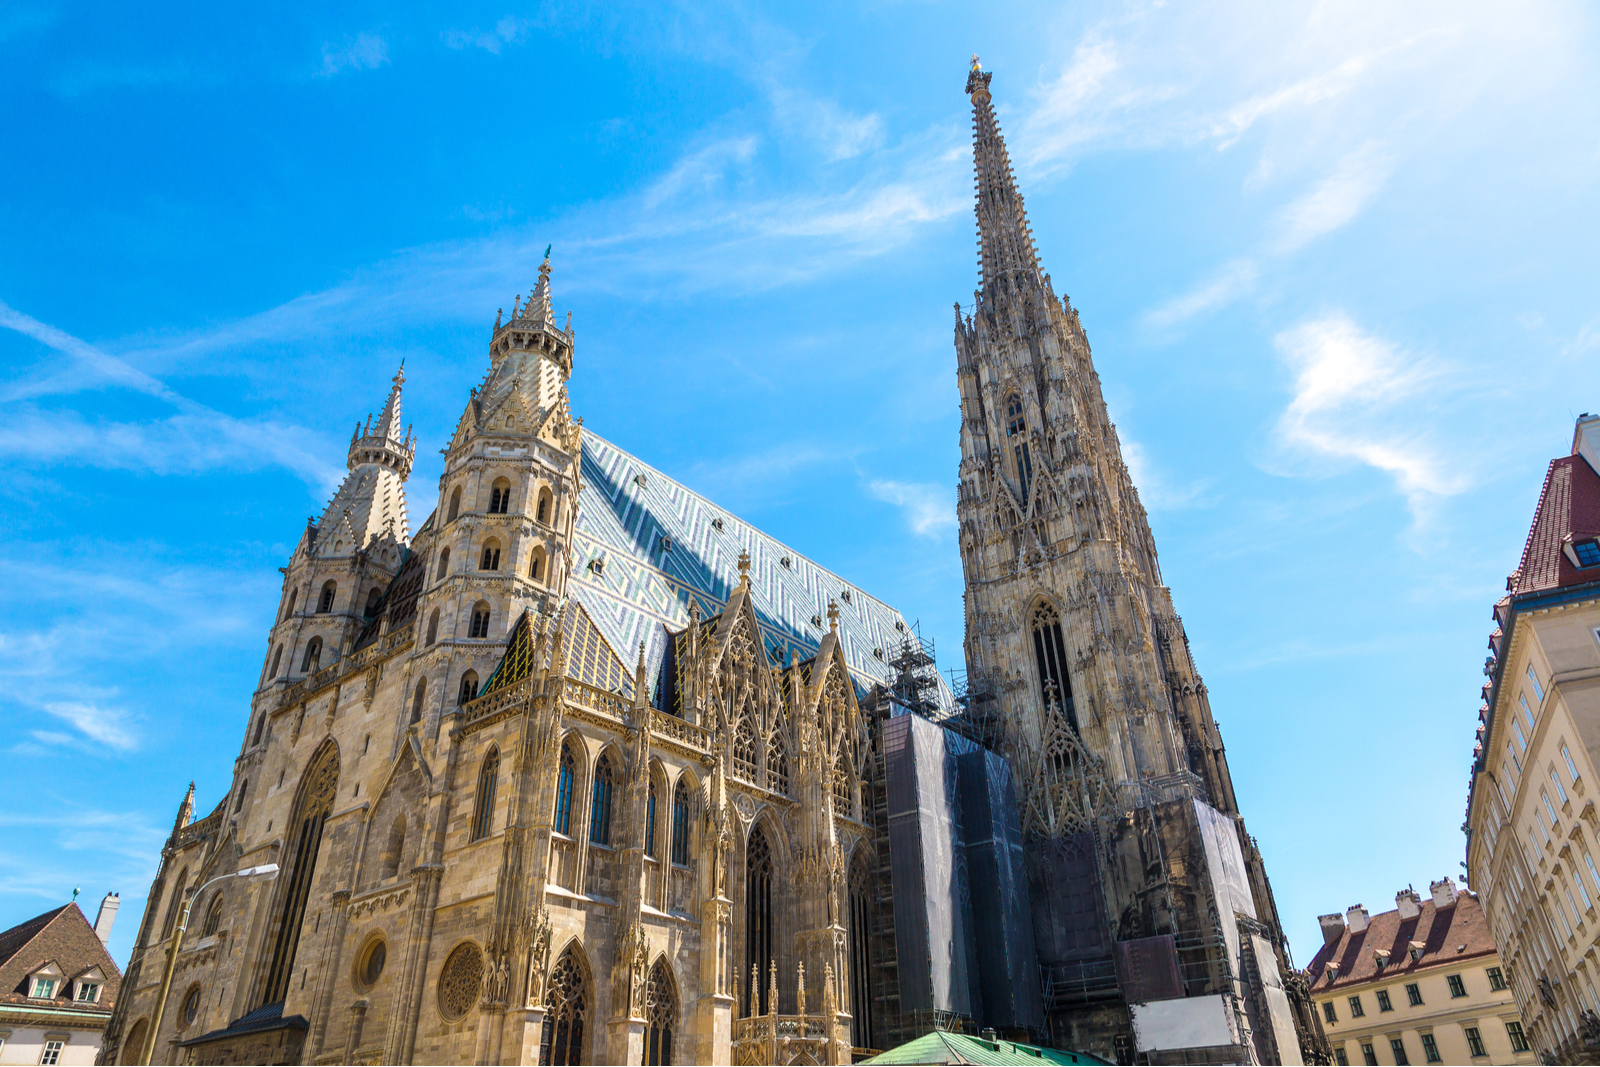 St Stephen cathedral in Vienna